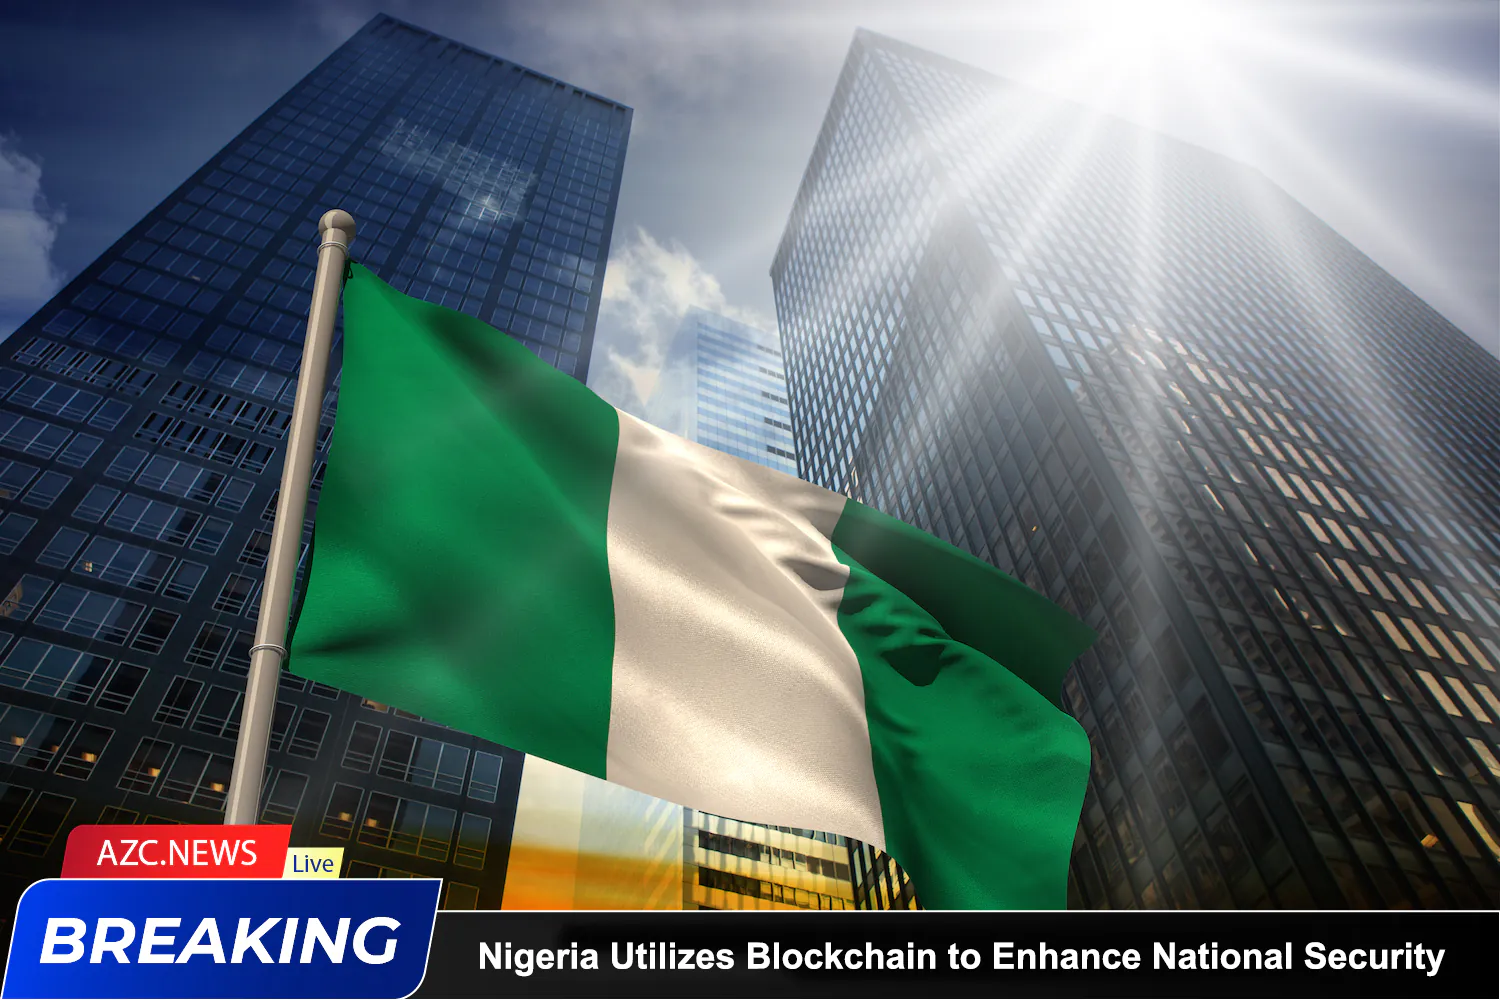 Azcnews Nigeria Utilizes Blockchain To Enhance National Security